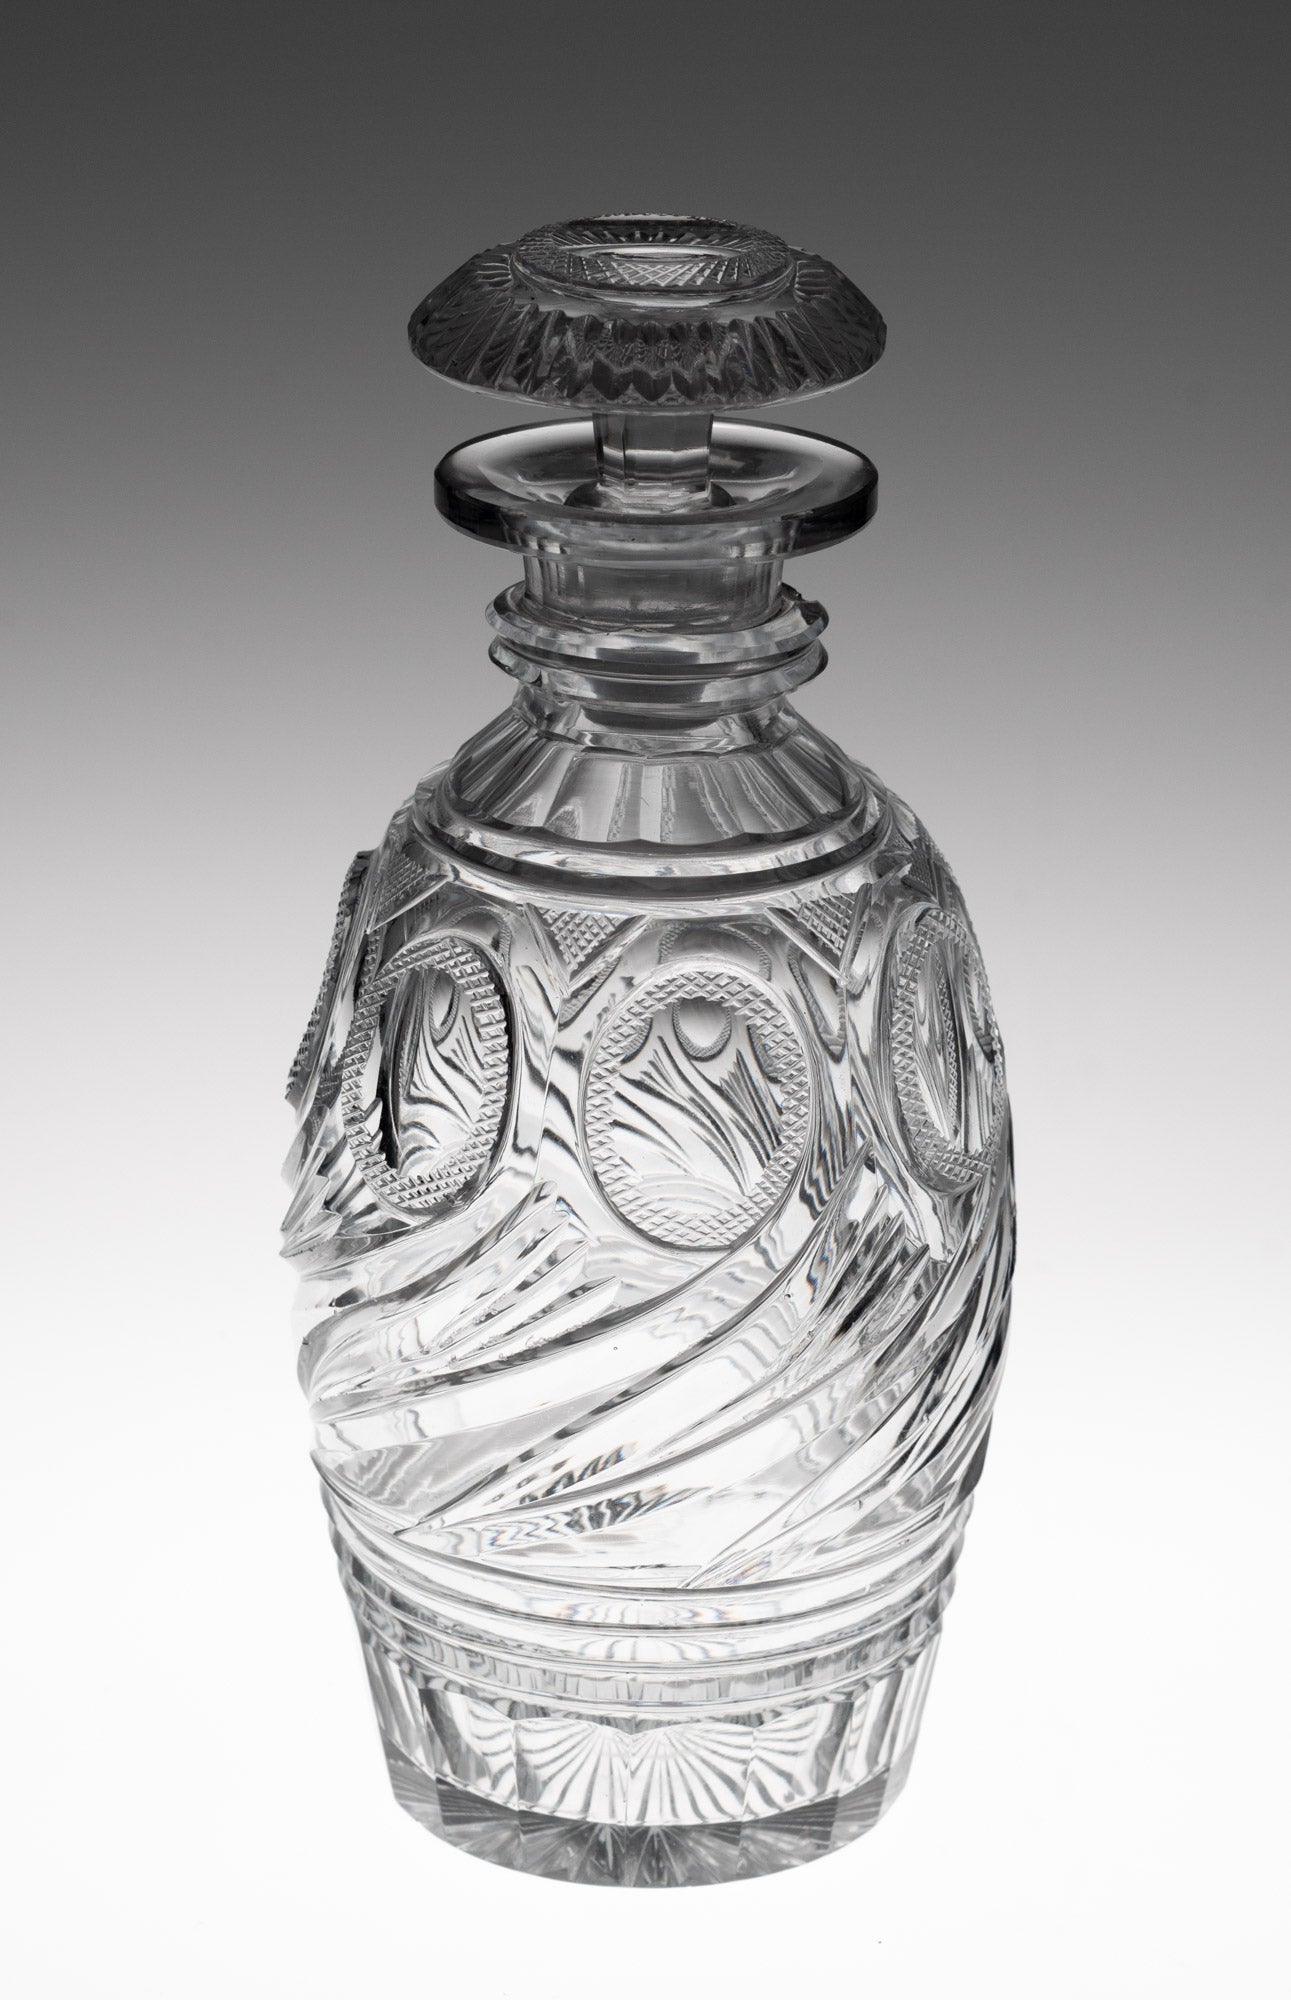 Pair Antique Georgian Regency Cut Glass Spirit/Liqueur Decanters c1830 (Code 2836)